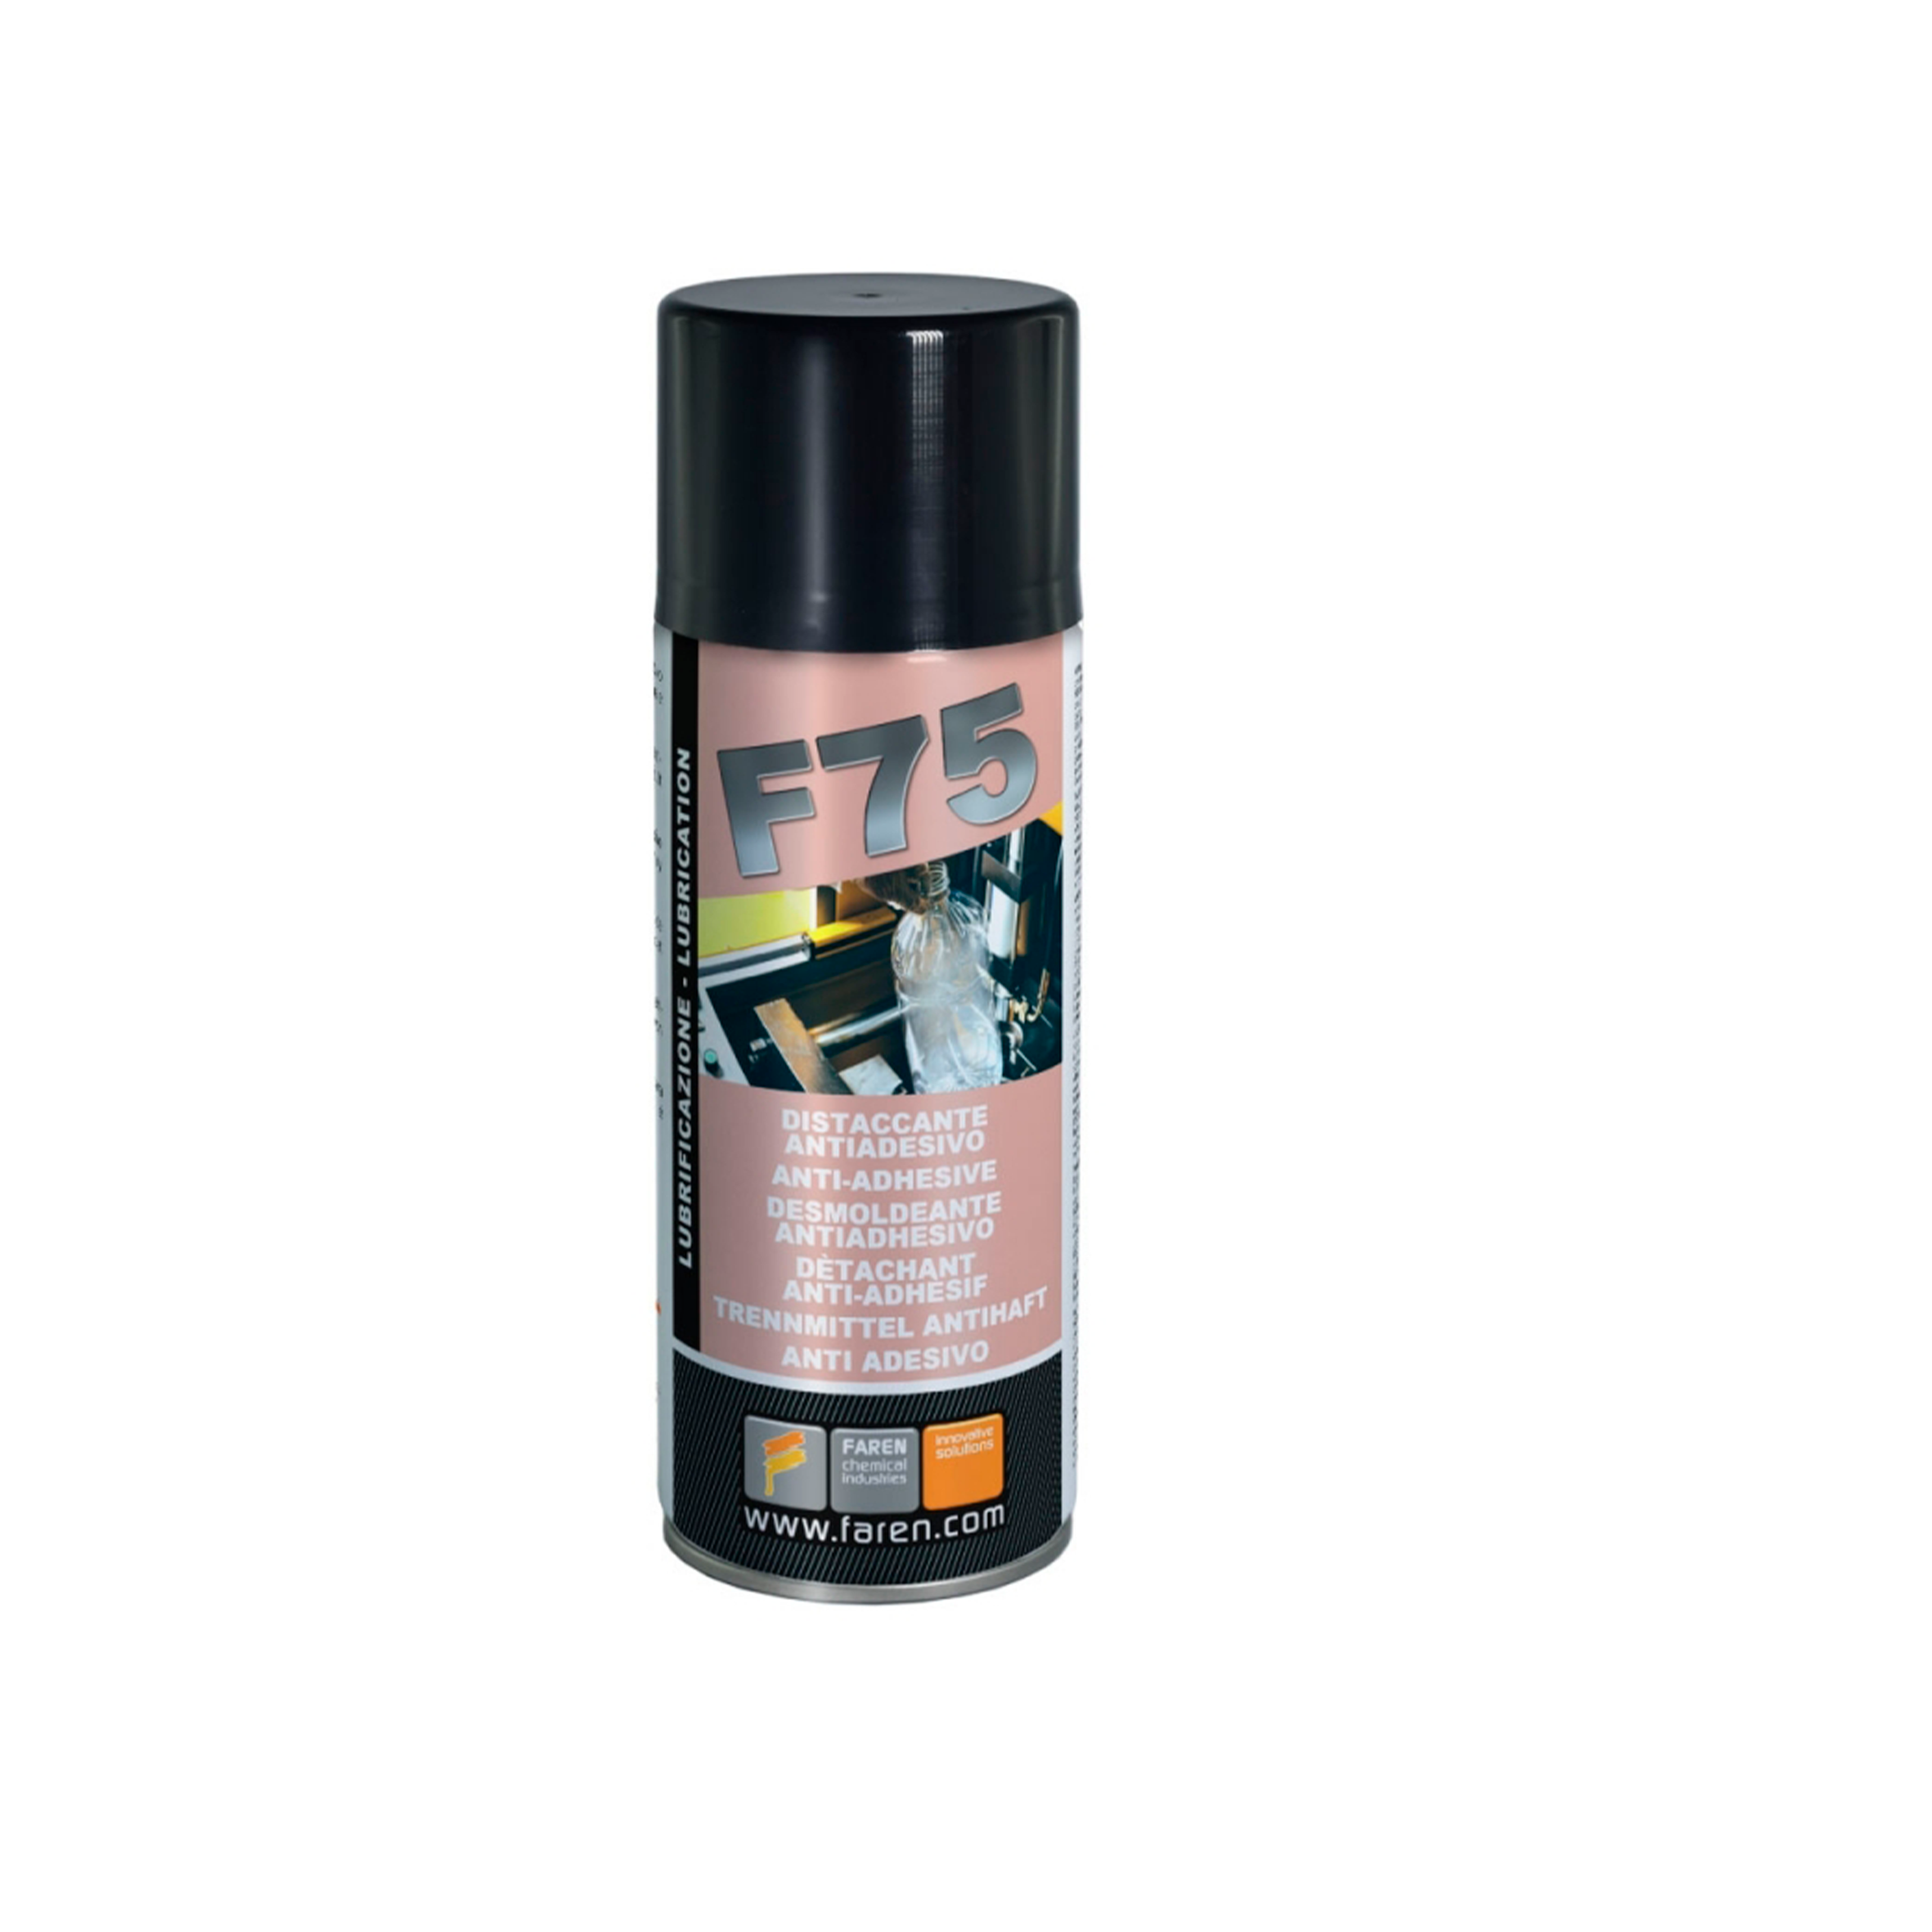 F75 FAREN silicone anti-adhesive release agent spray can 400ml.